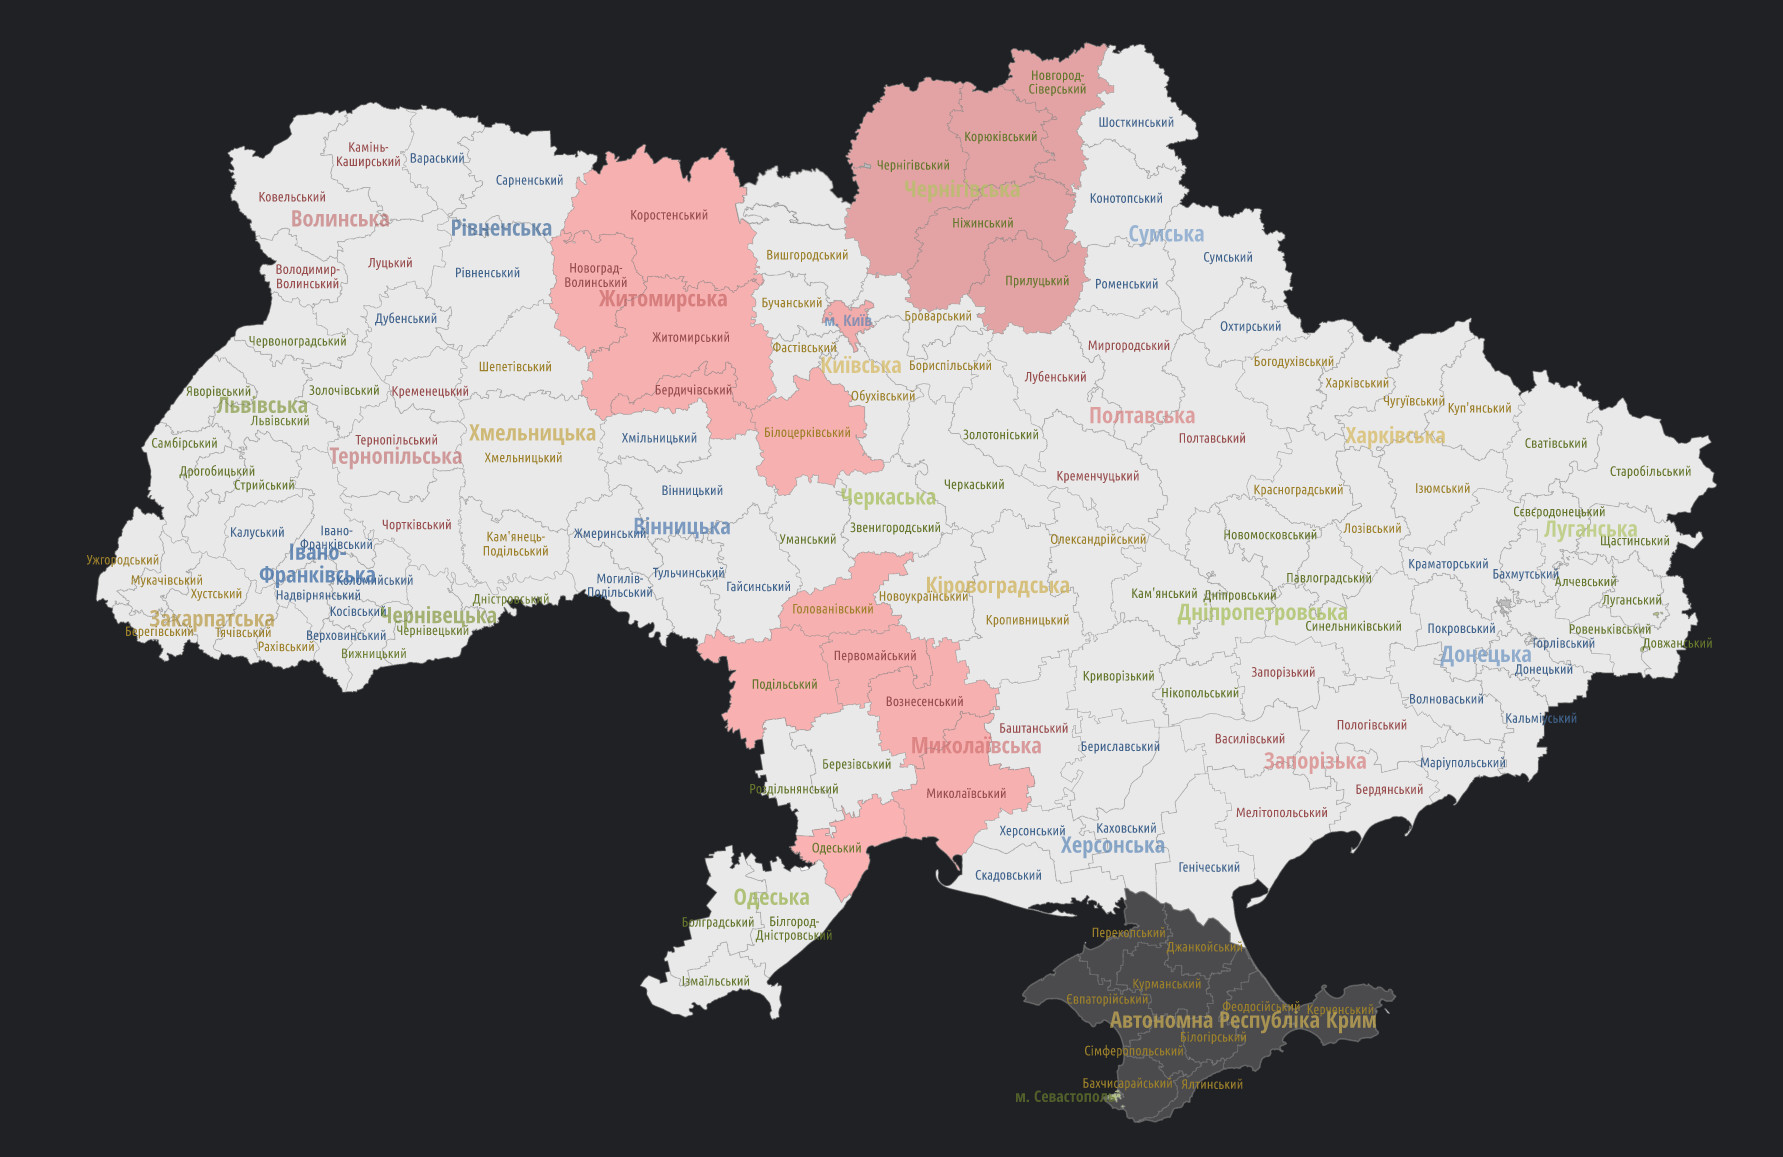 Карта тревог в украине сейчас. Карта Украины. Карта воздушных тревог в Украине. Карта тревог по Украине. Тревожная карта Украины.